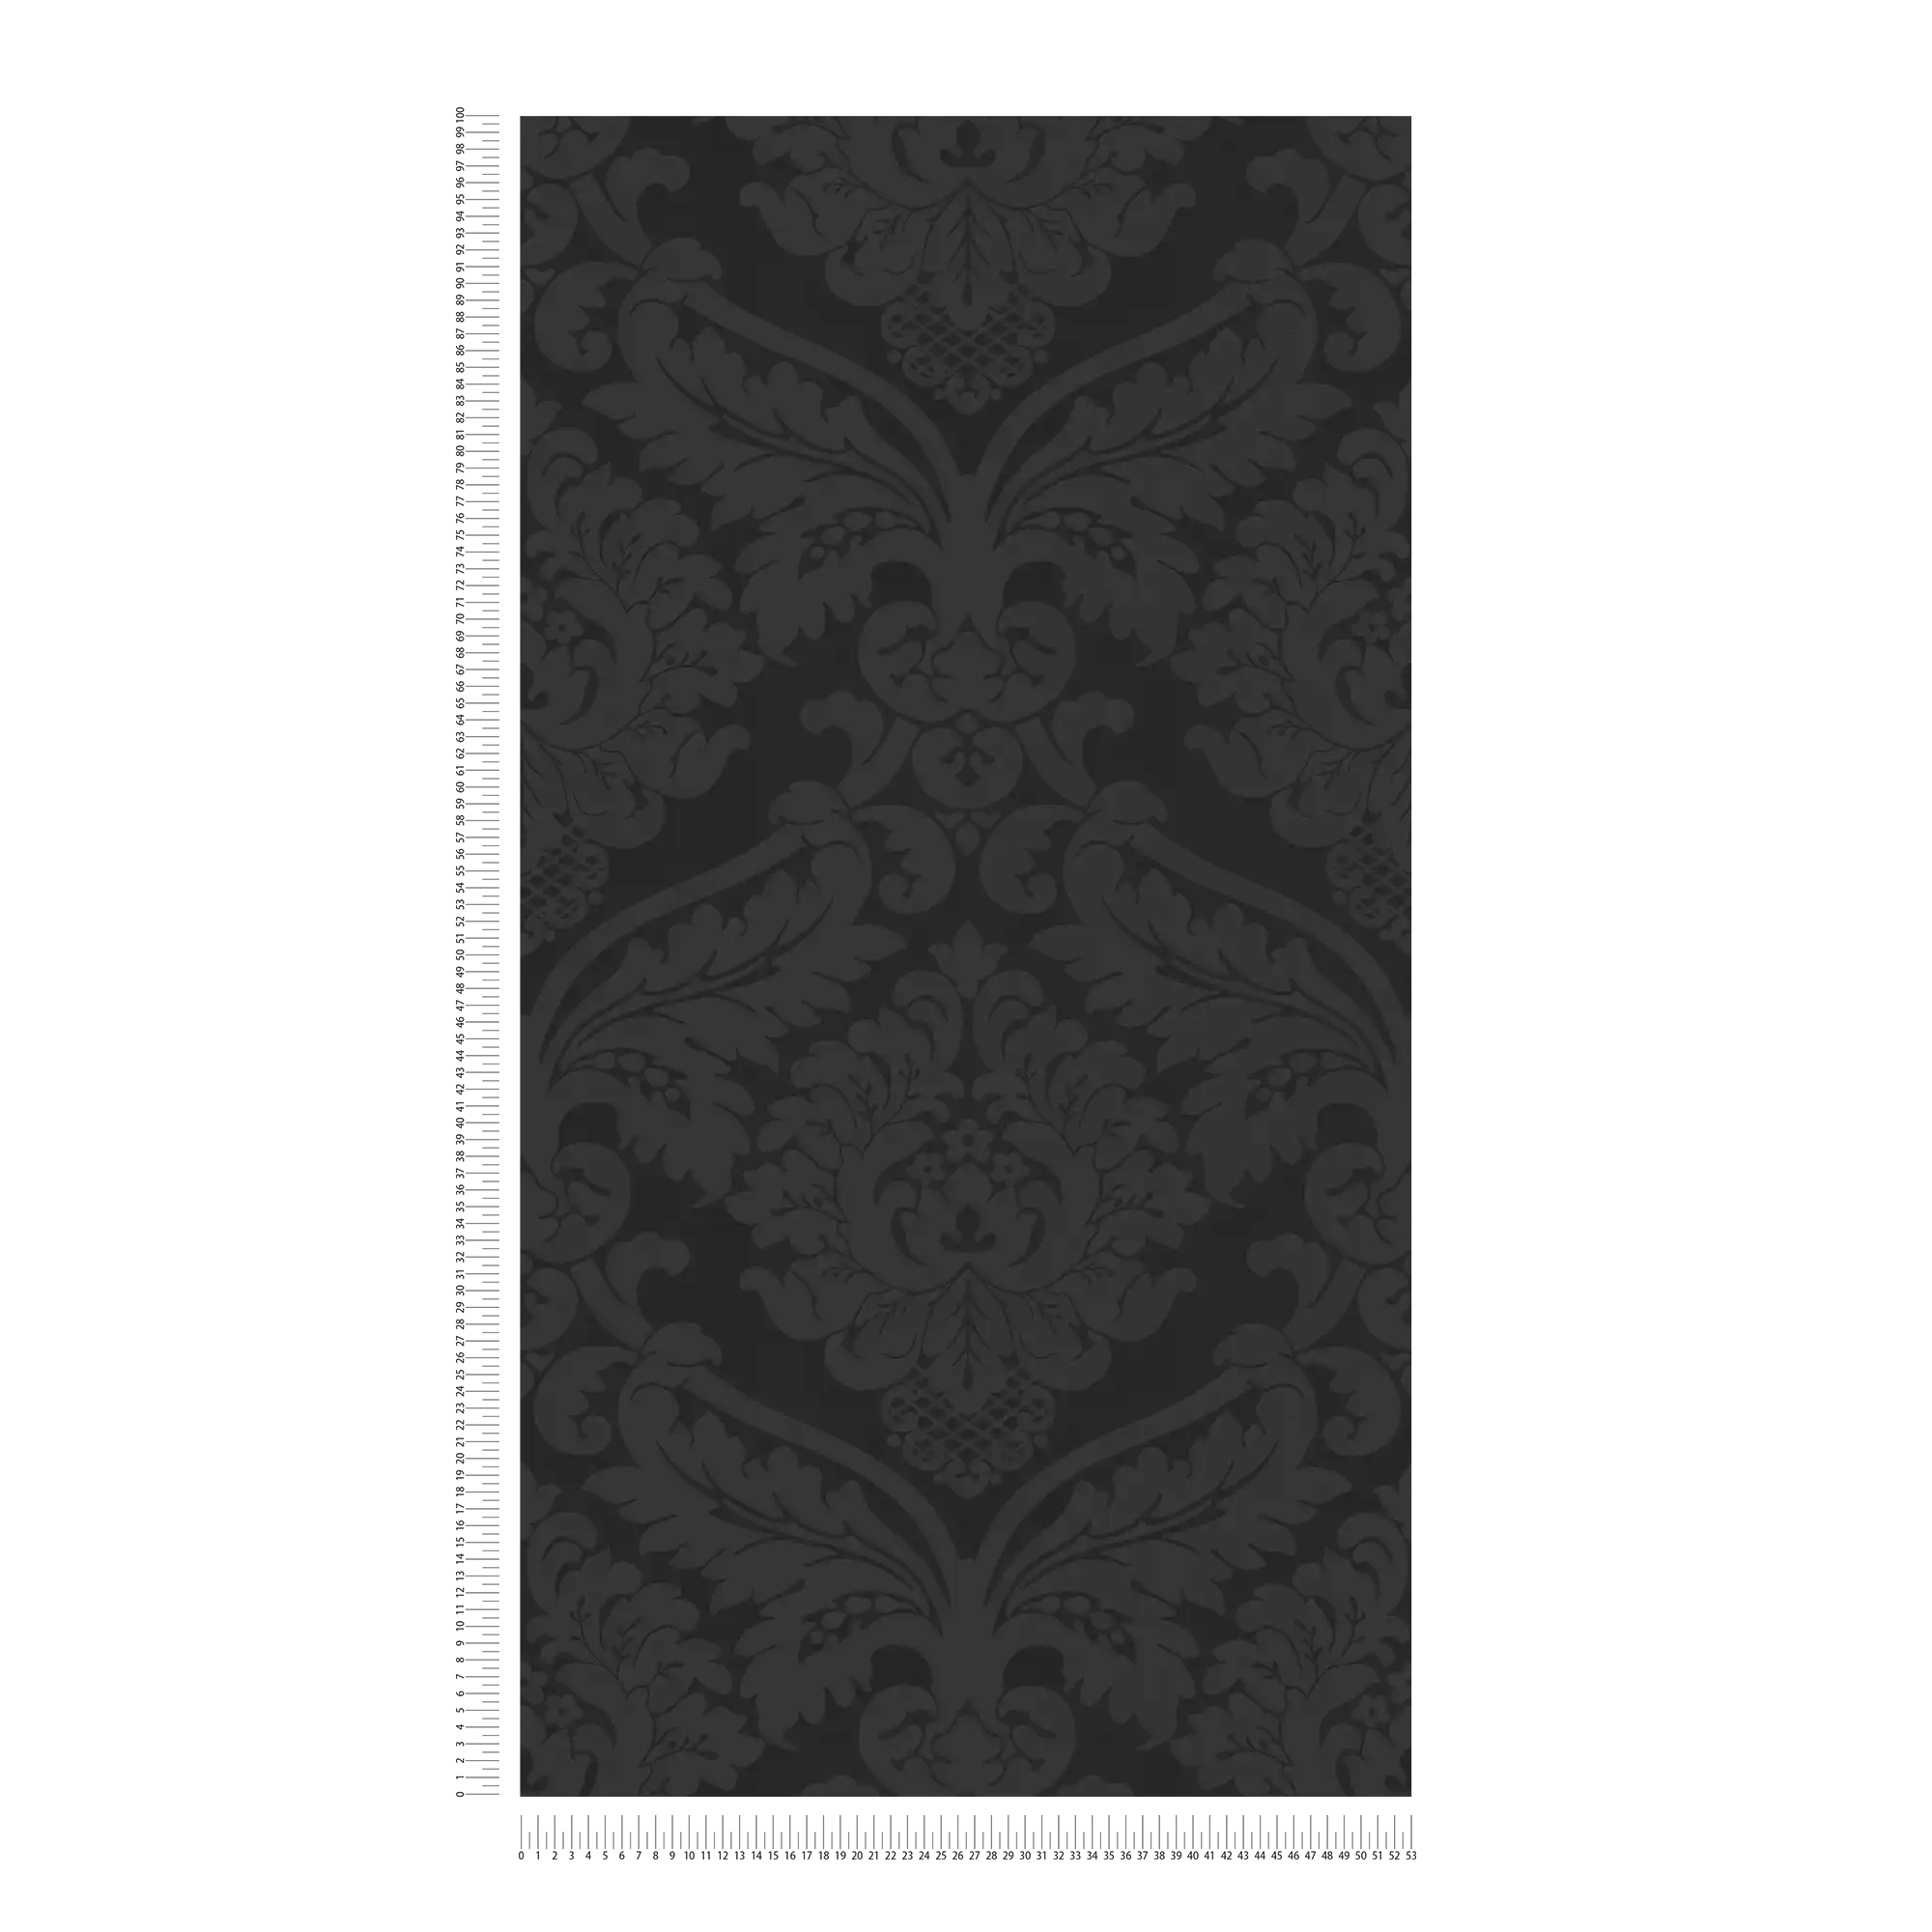             Baroque ornament wallpaper with matte & gloss effect - black
        